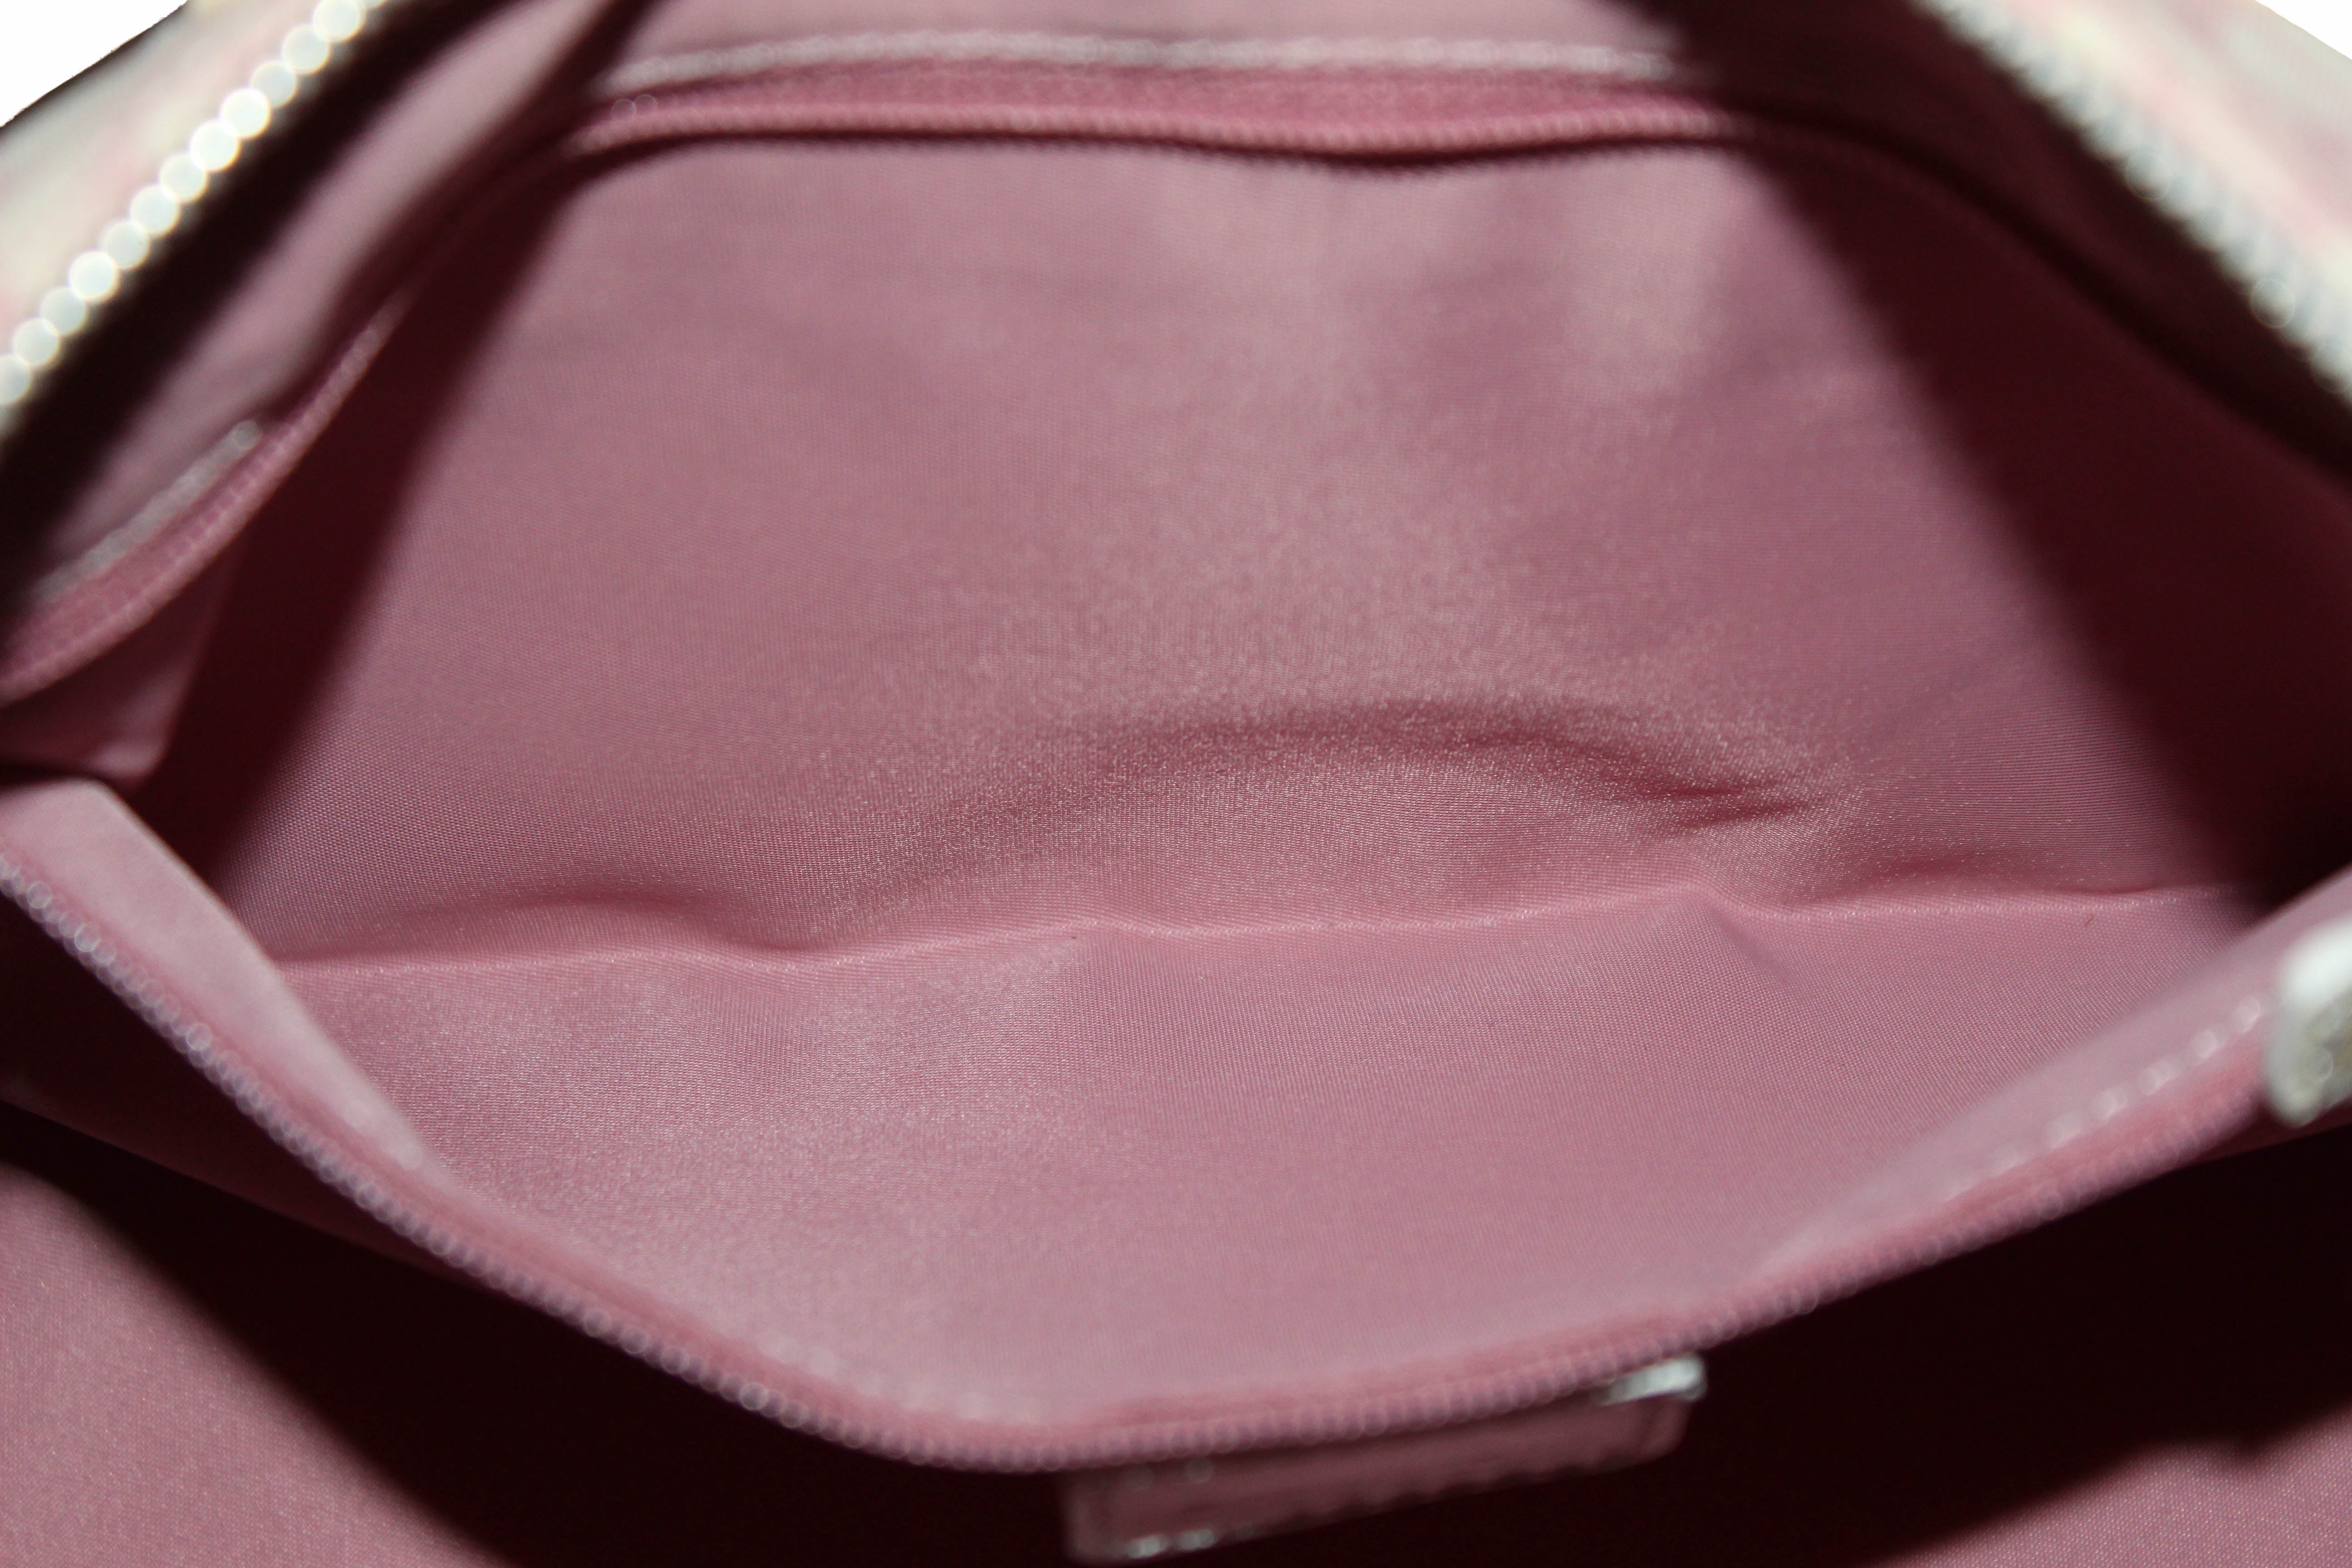 Christian Dior Shoulder Bag Authentic Girly Pink Trotter No.1 